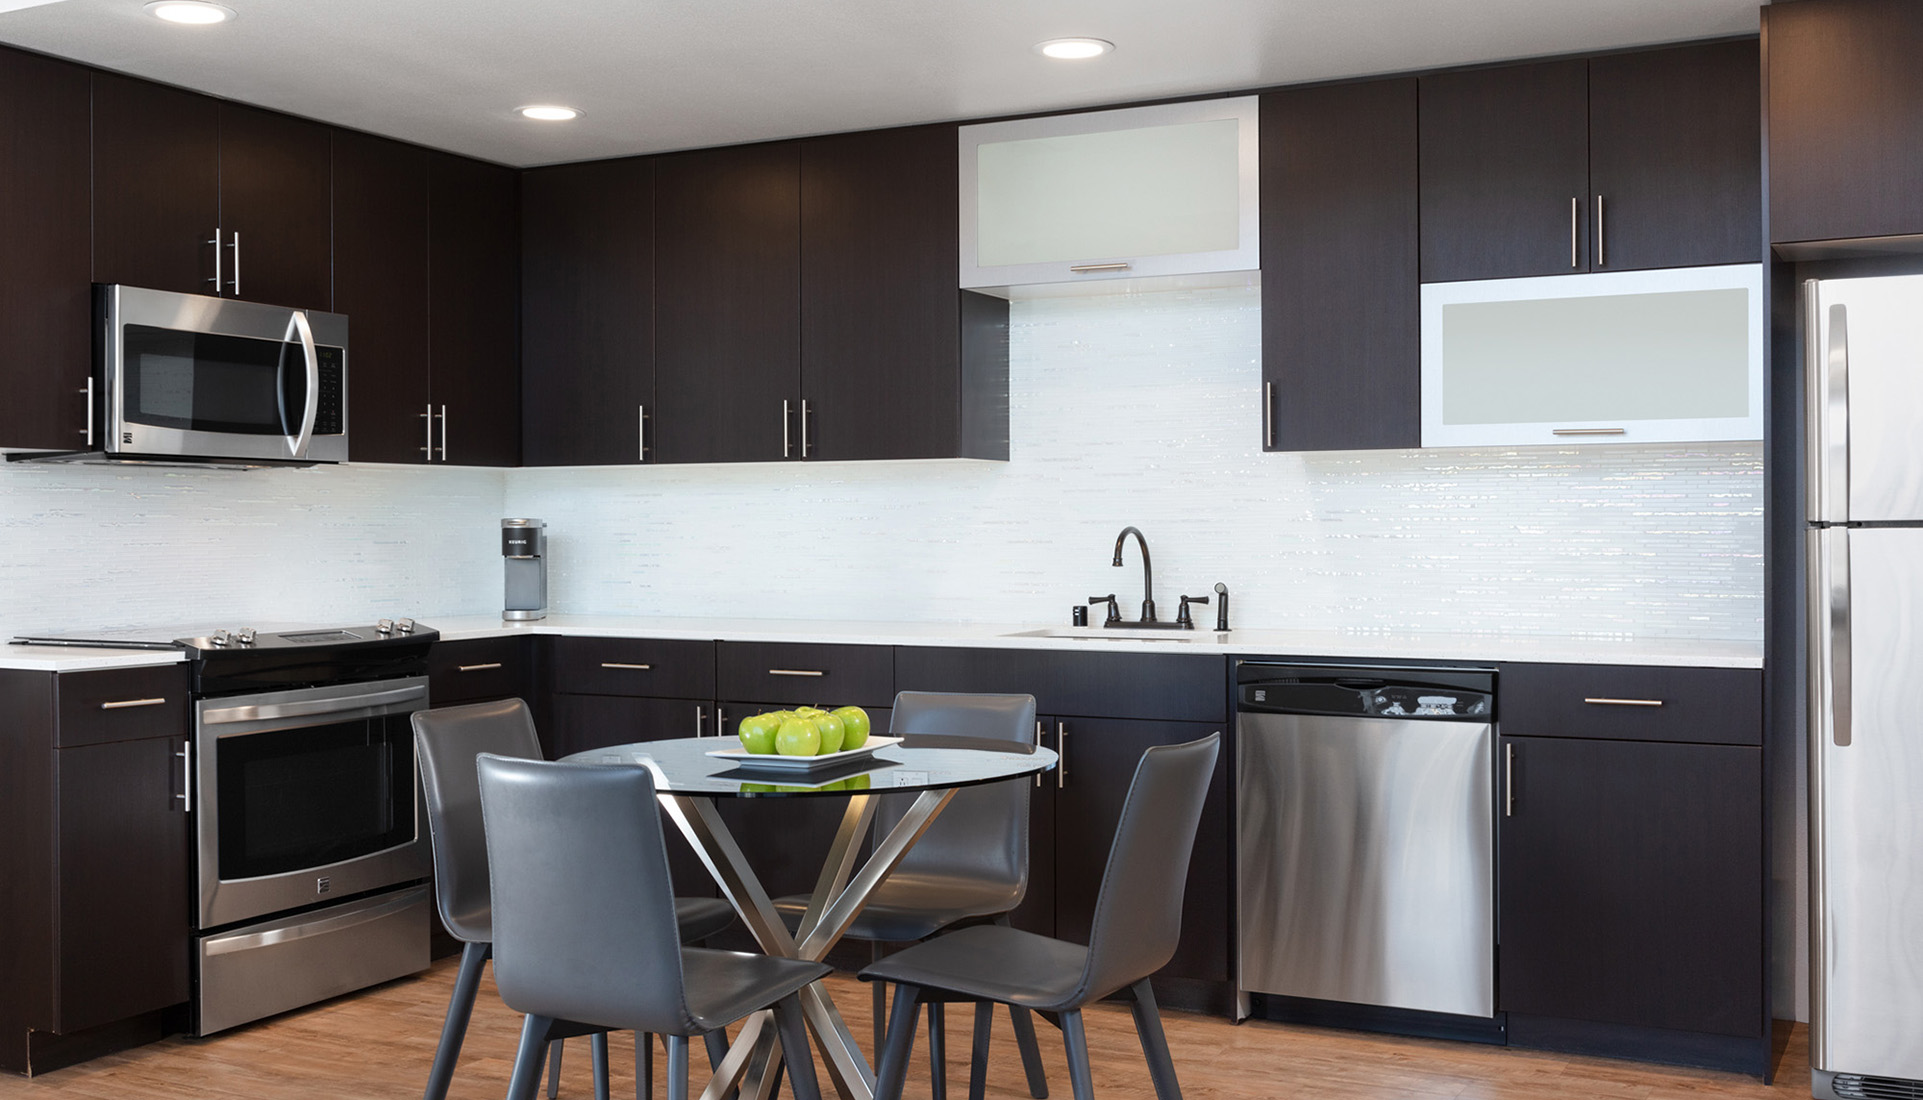 AVE Walnut Creek apartment kitchen features stainless steel appliances Quartz countertops 